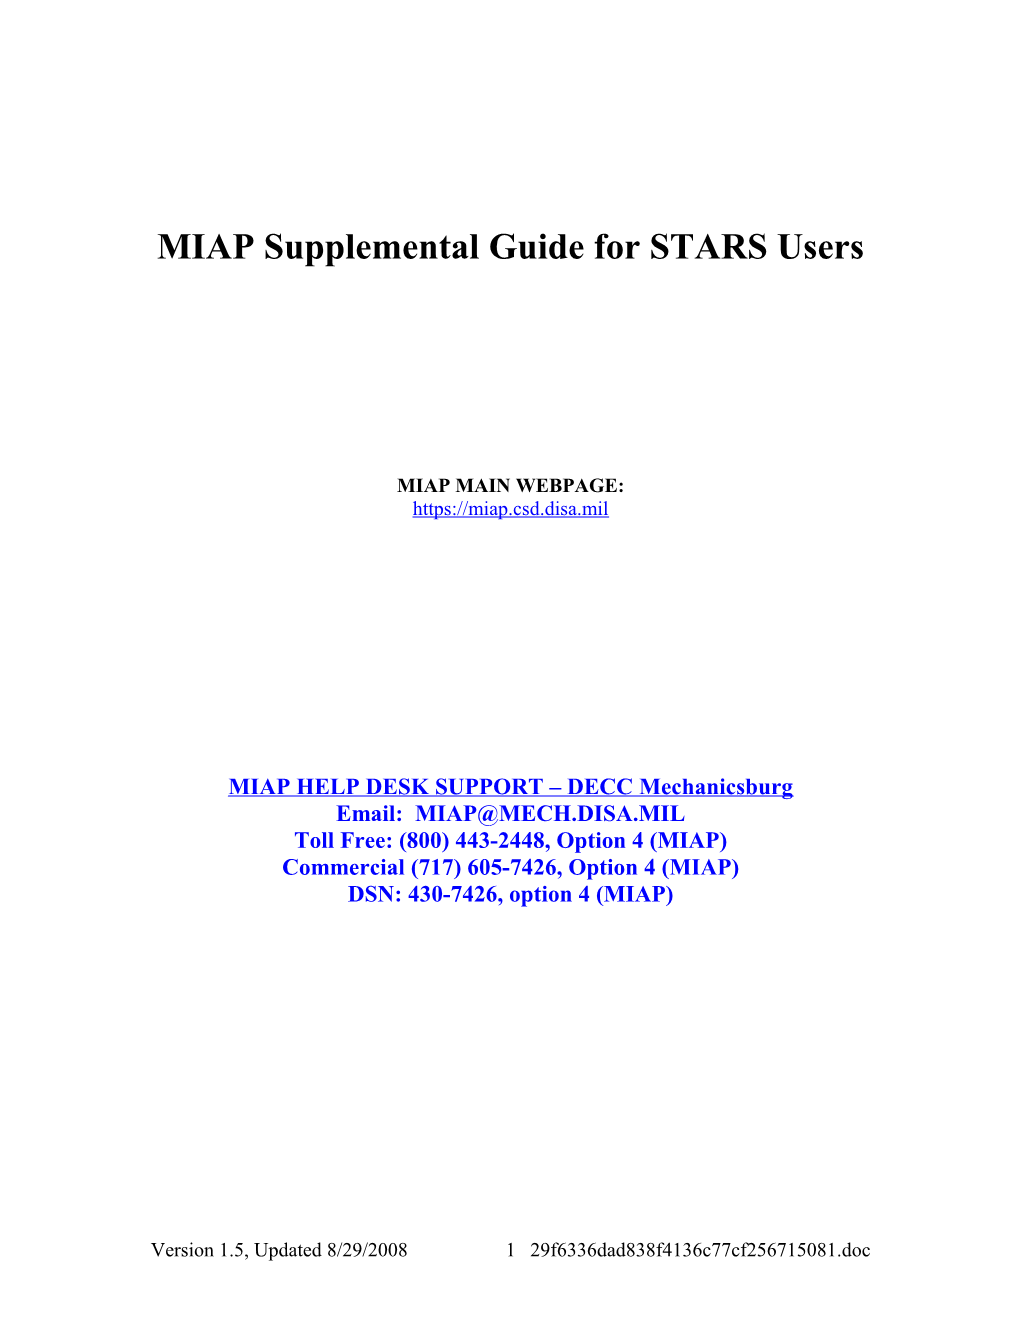 STARS MIAP Supp Guide